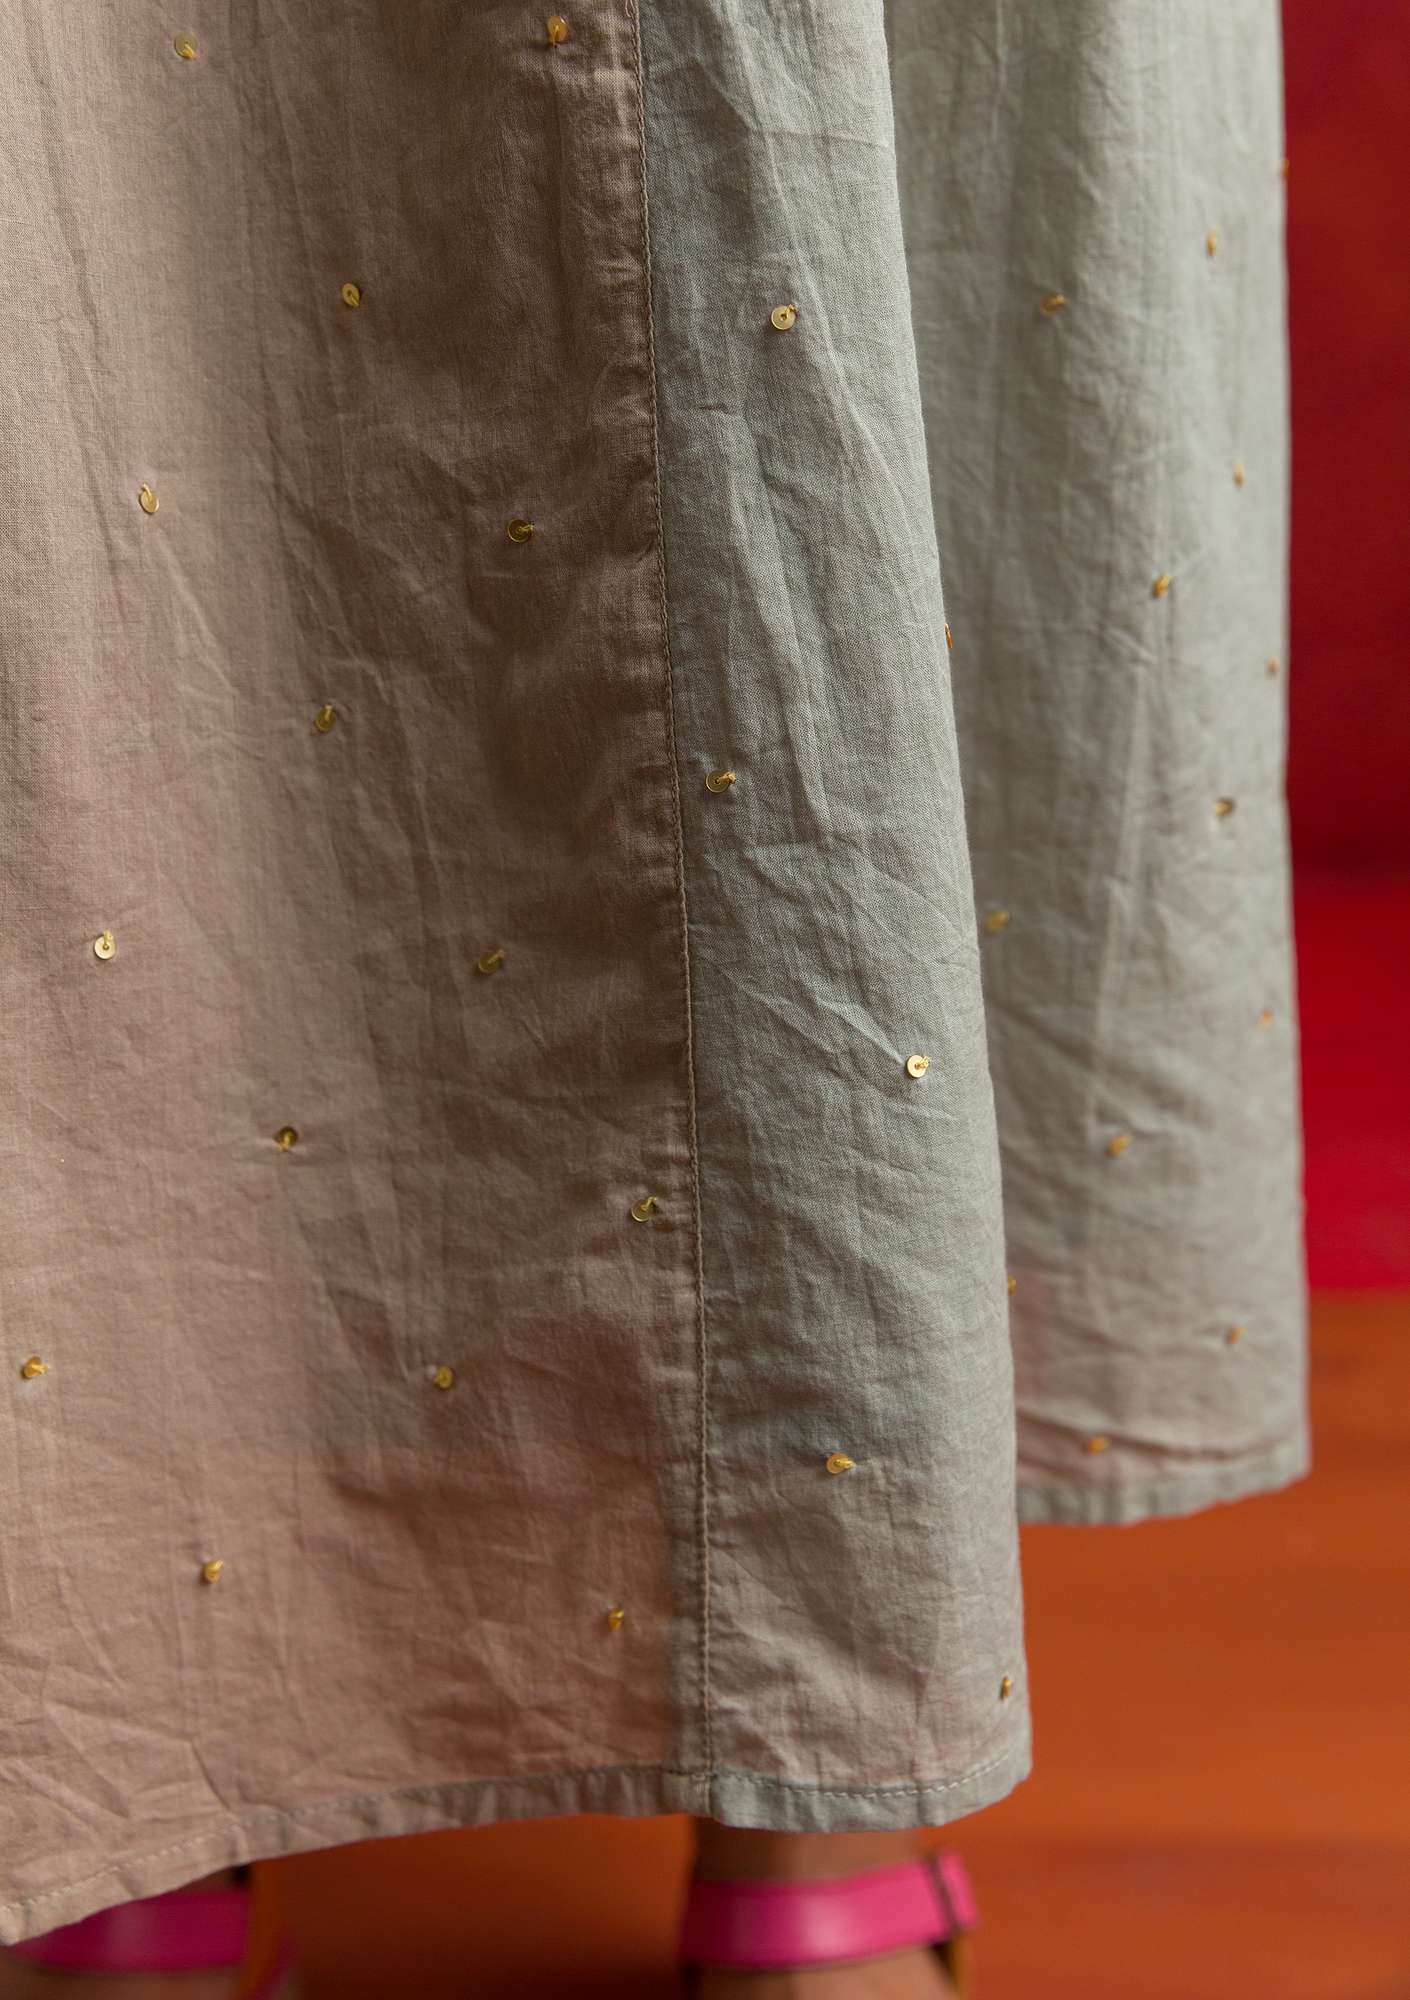 “Volcano  woven organic cotton skirt warm grey